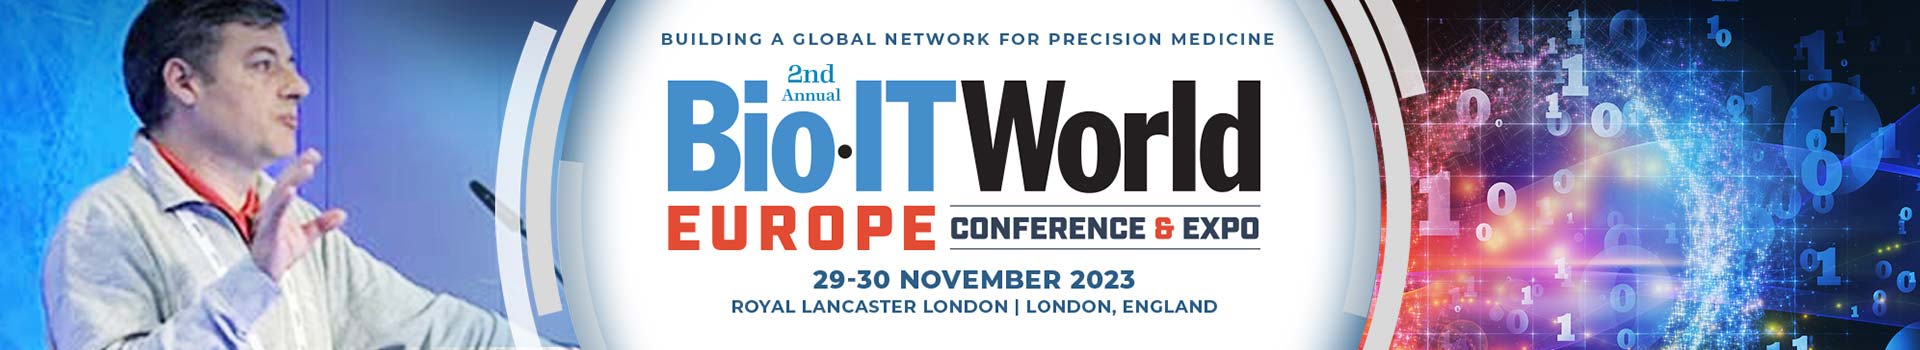 Bio-IT World Conference & Expo Europe 2023, London, United Kingdom